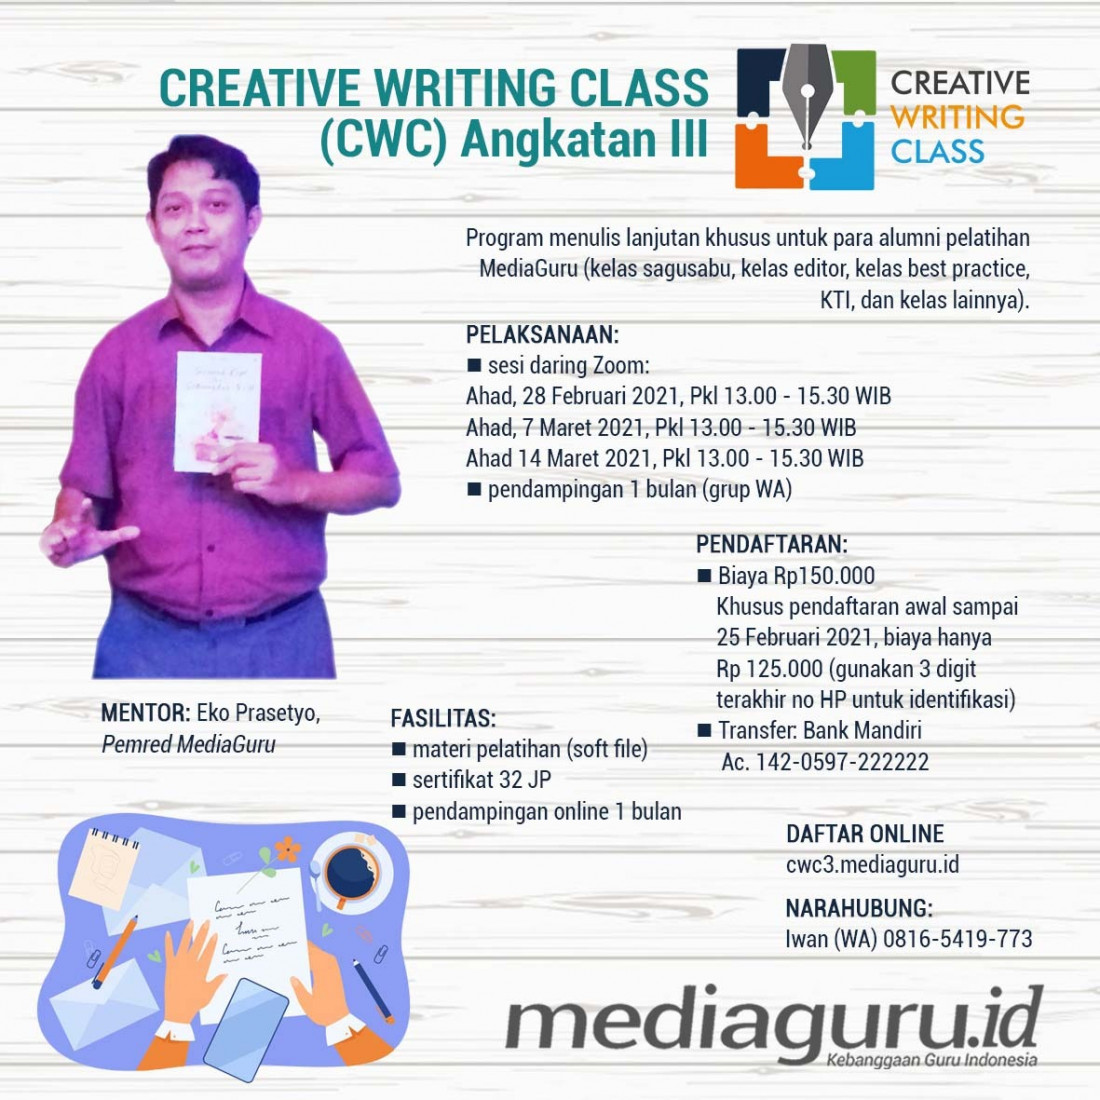 CREATIVE WRITING CLASS (CWC) III MEDIAGURU (28 FEBRUARI & 14 MARET 2021)